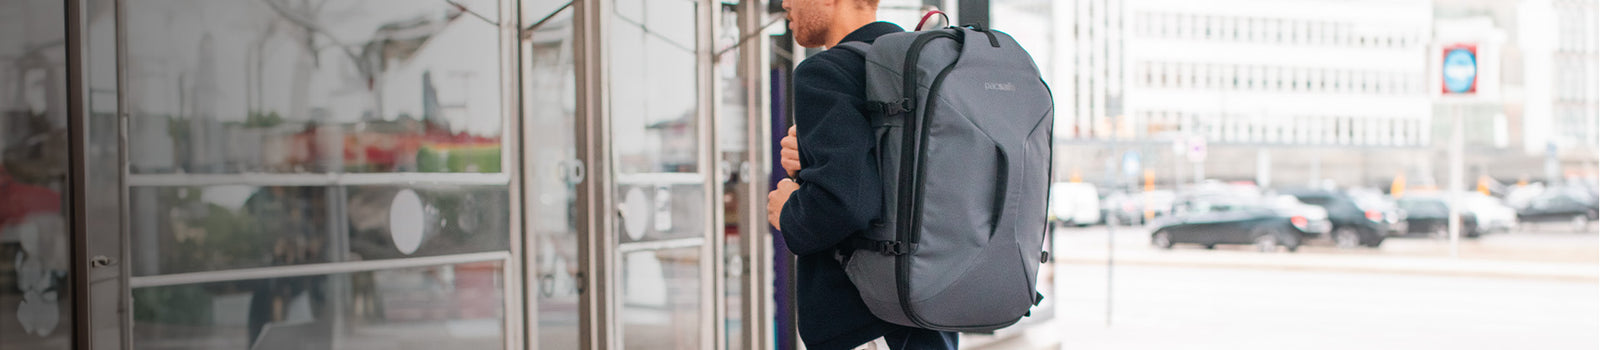 Waterproof,Lightweight,Portable Pocket Front Functional Backpack